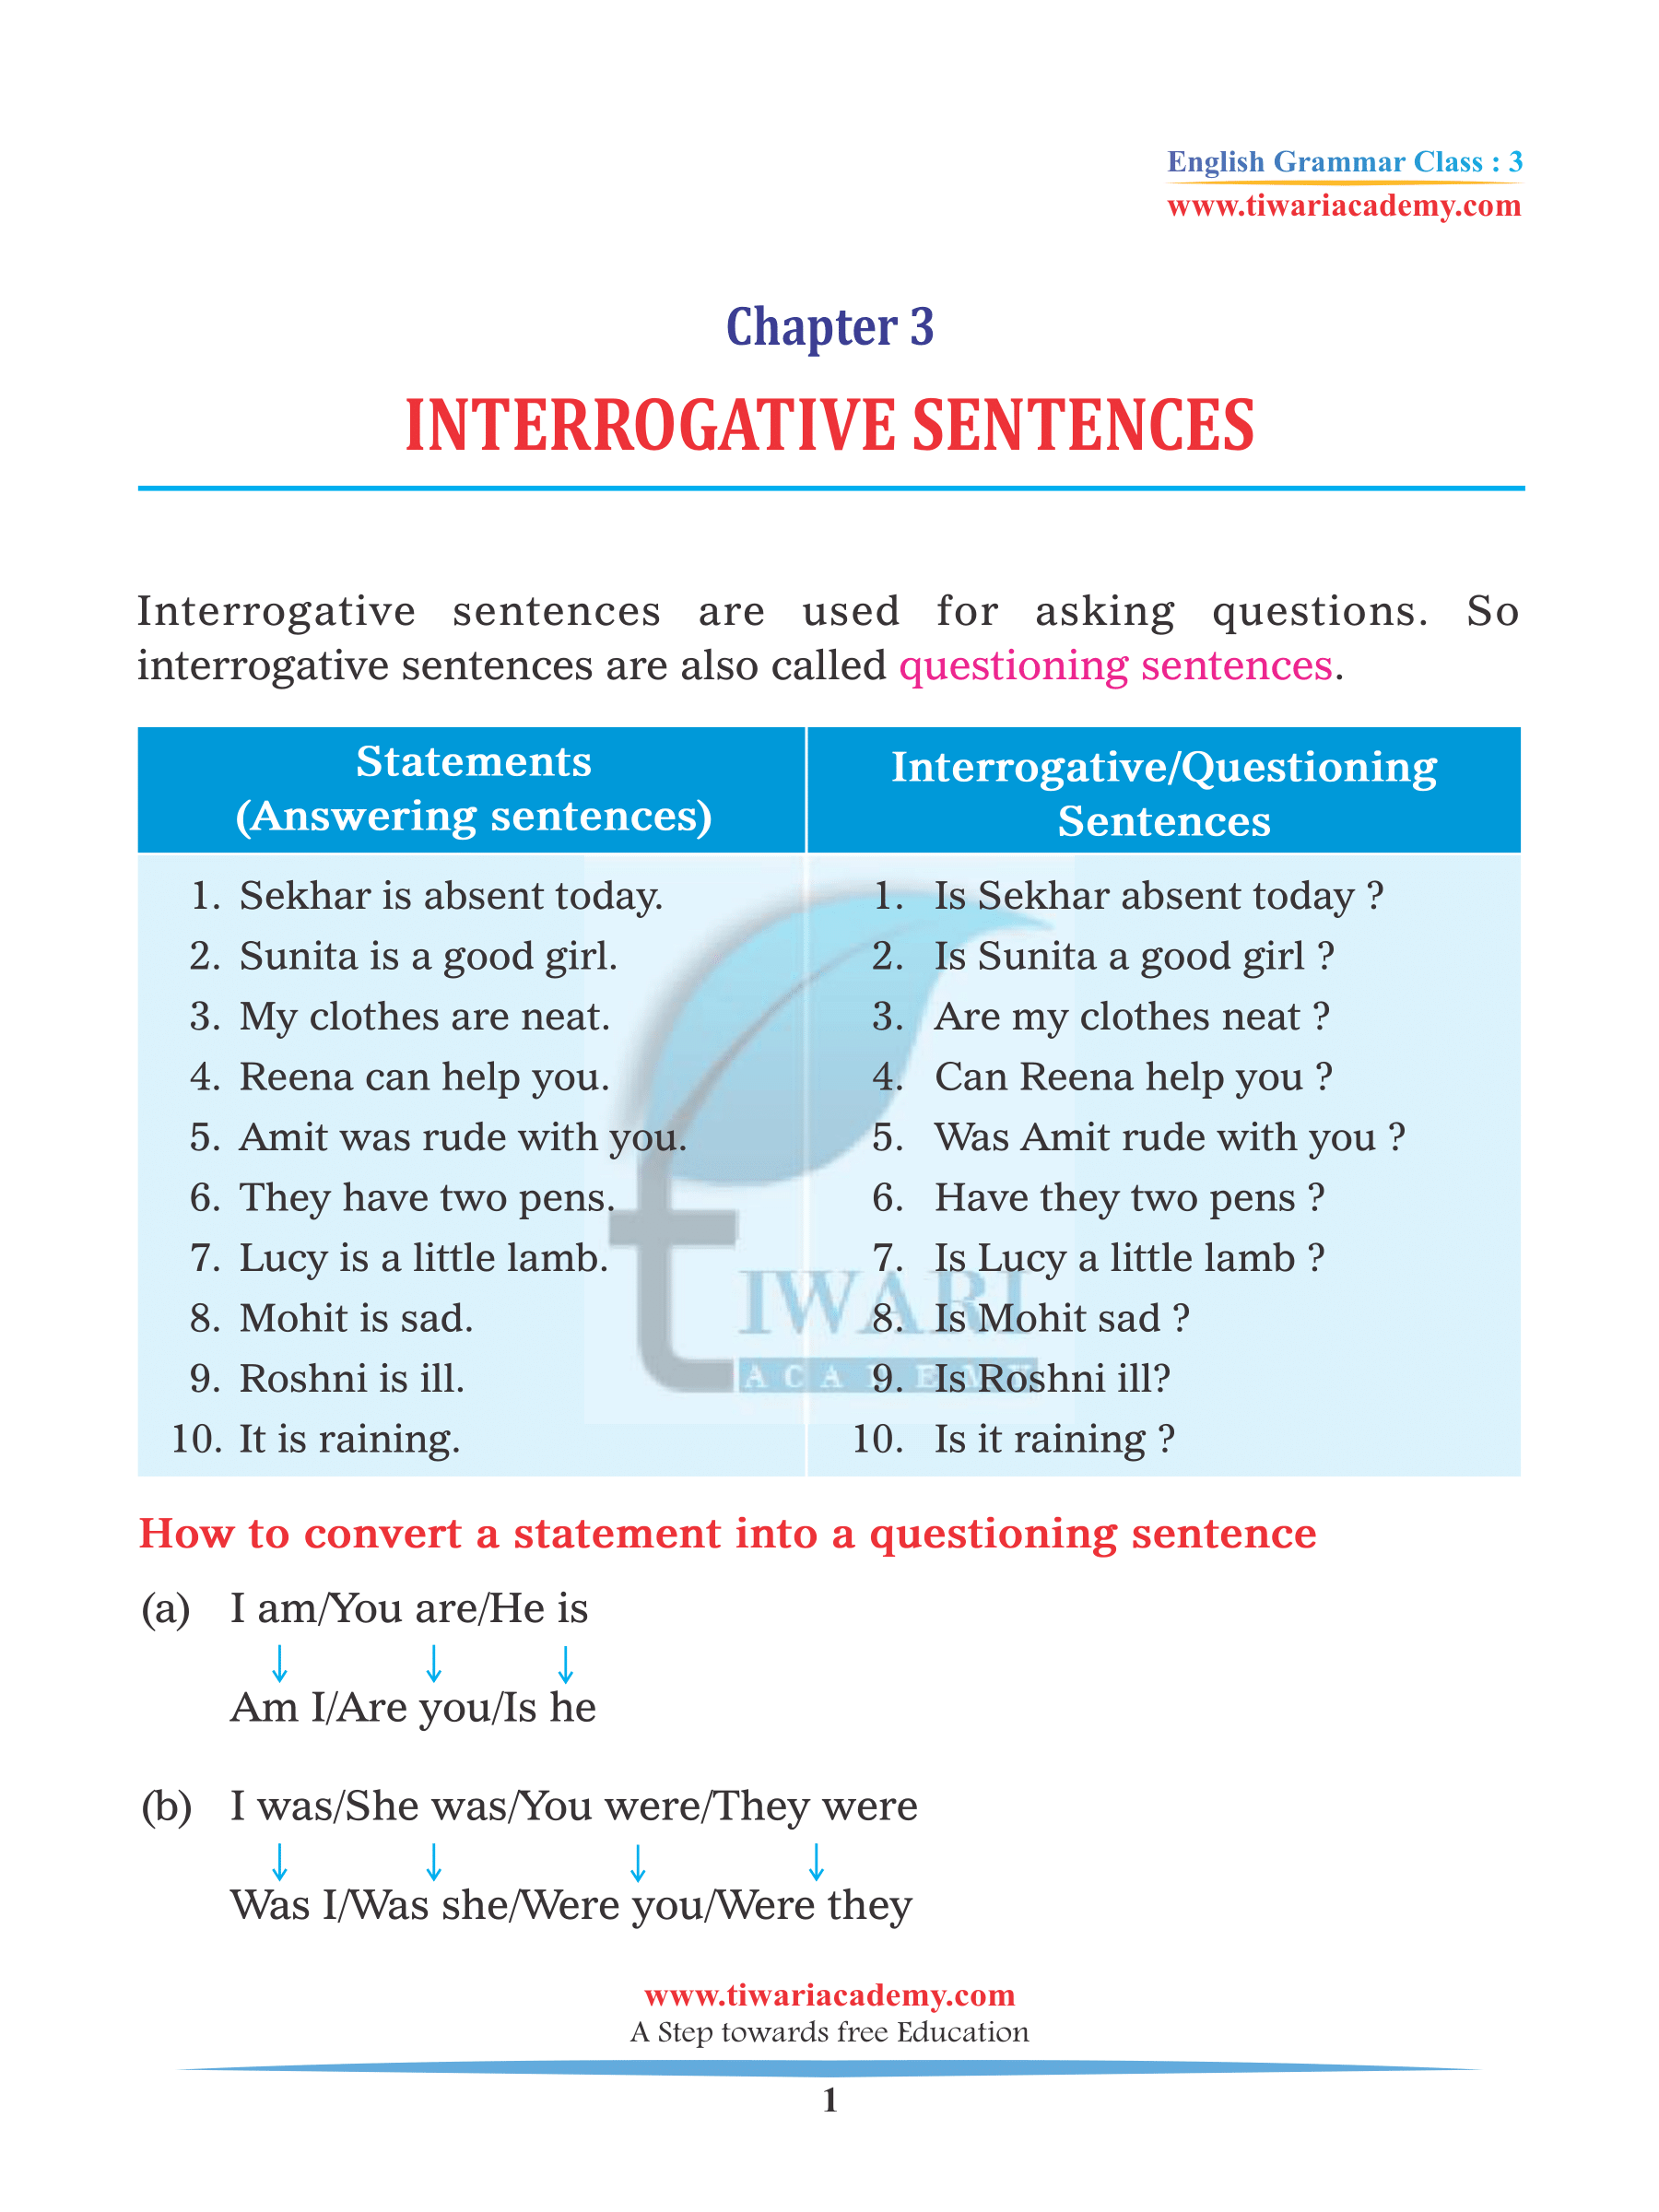 3rd English Grammar Chapter 3 Interrogative Sentences